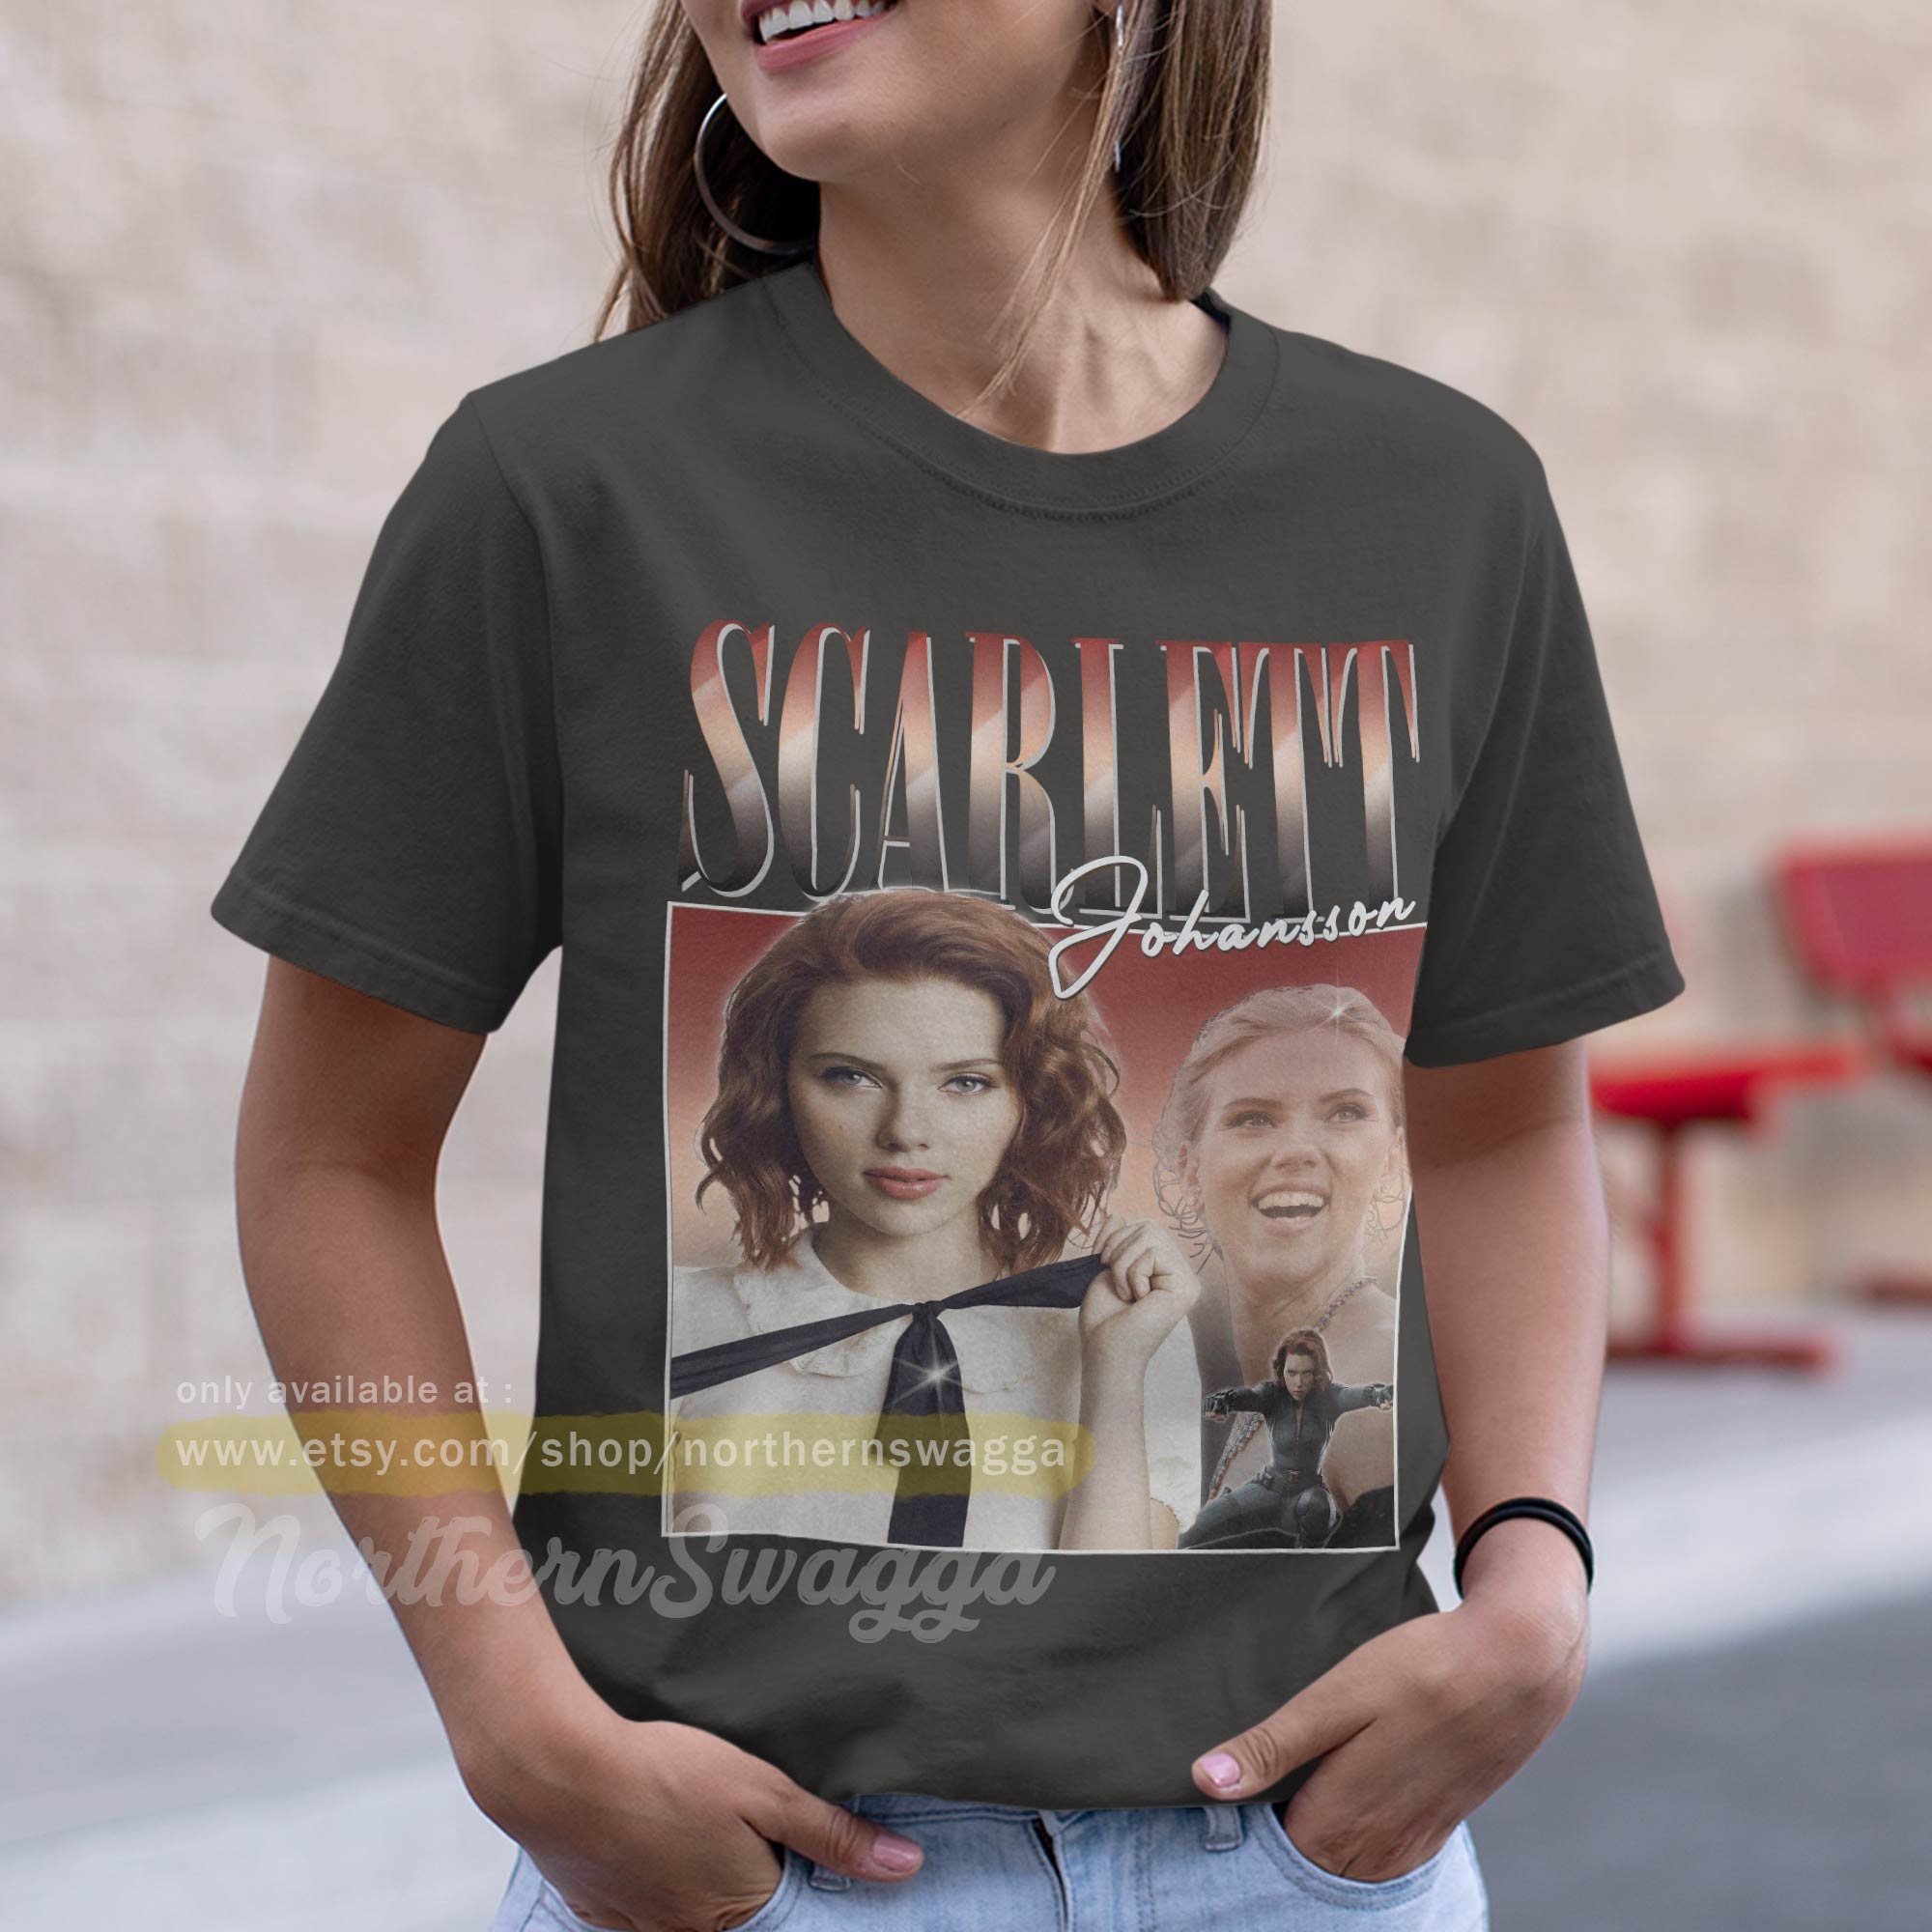 Scarlett Johansson Shirt Design Retro Style Cool Fan Art | Etsy